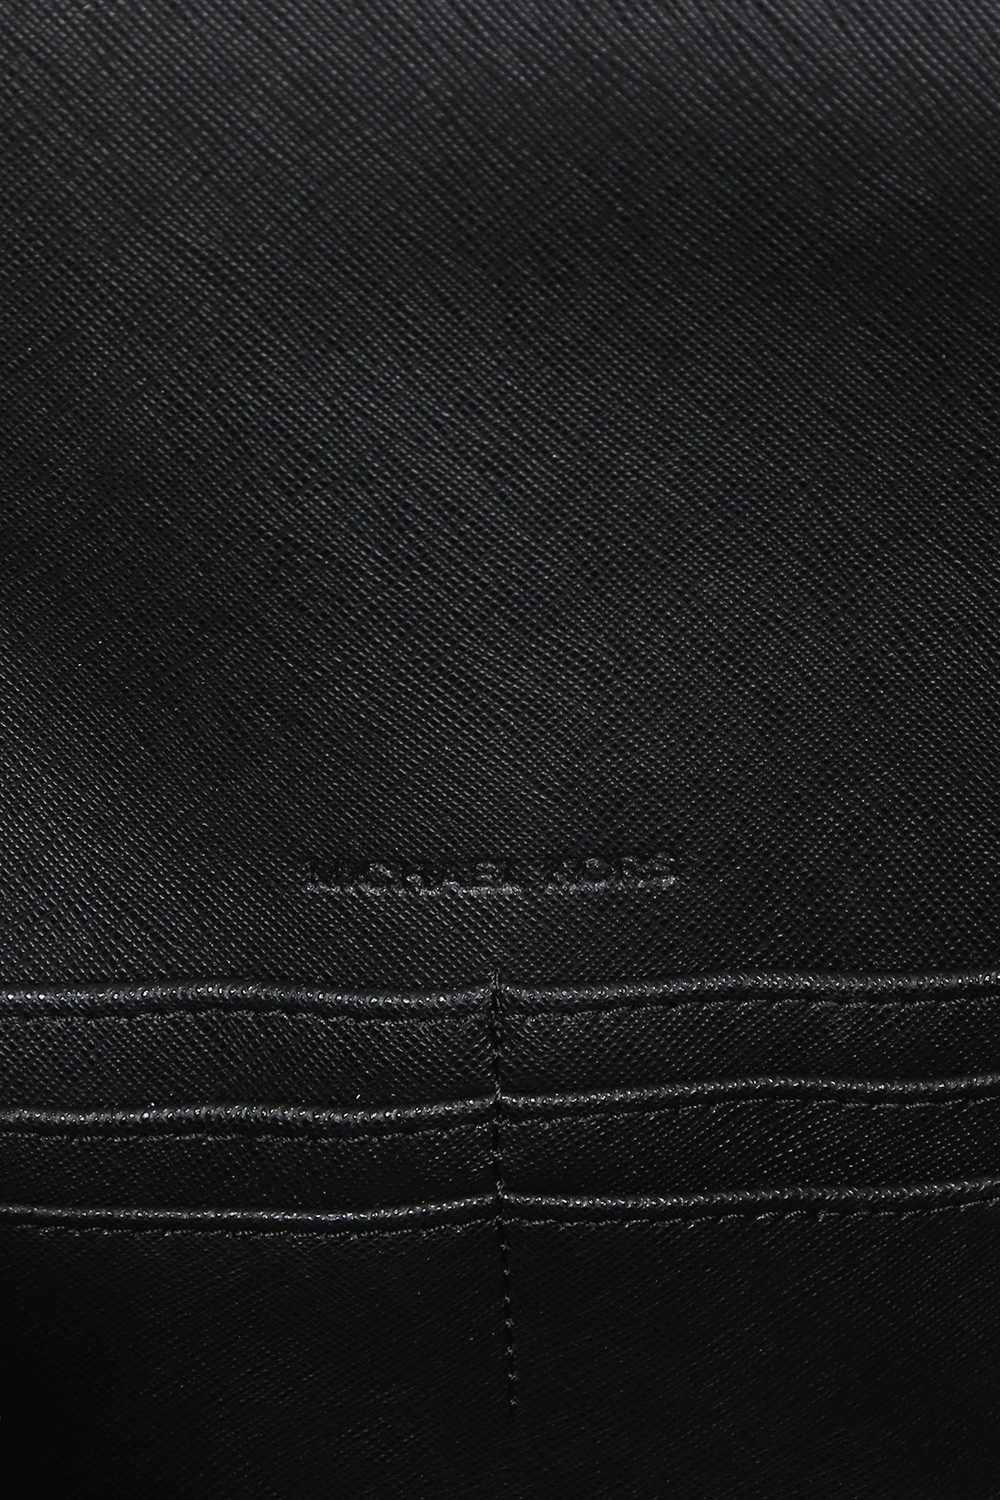 Shoulder bags Michael Kors - Daniela structured leather bag - 32T6SDDC3L075